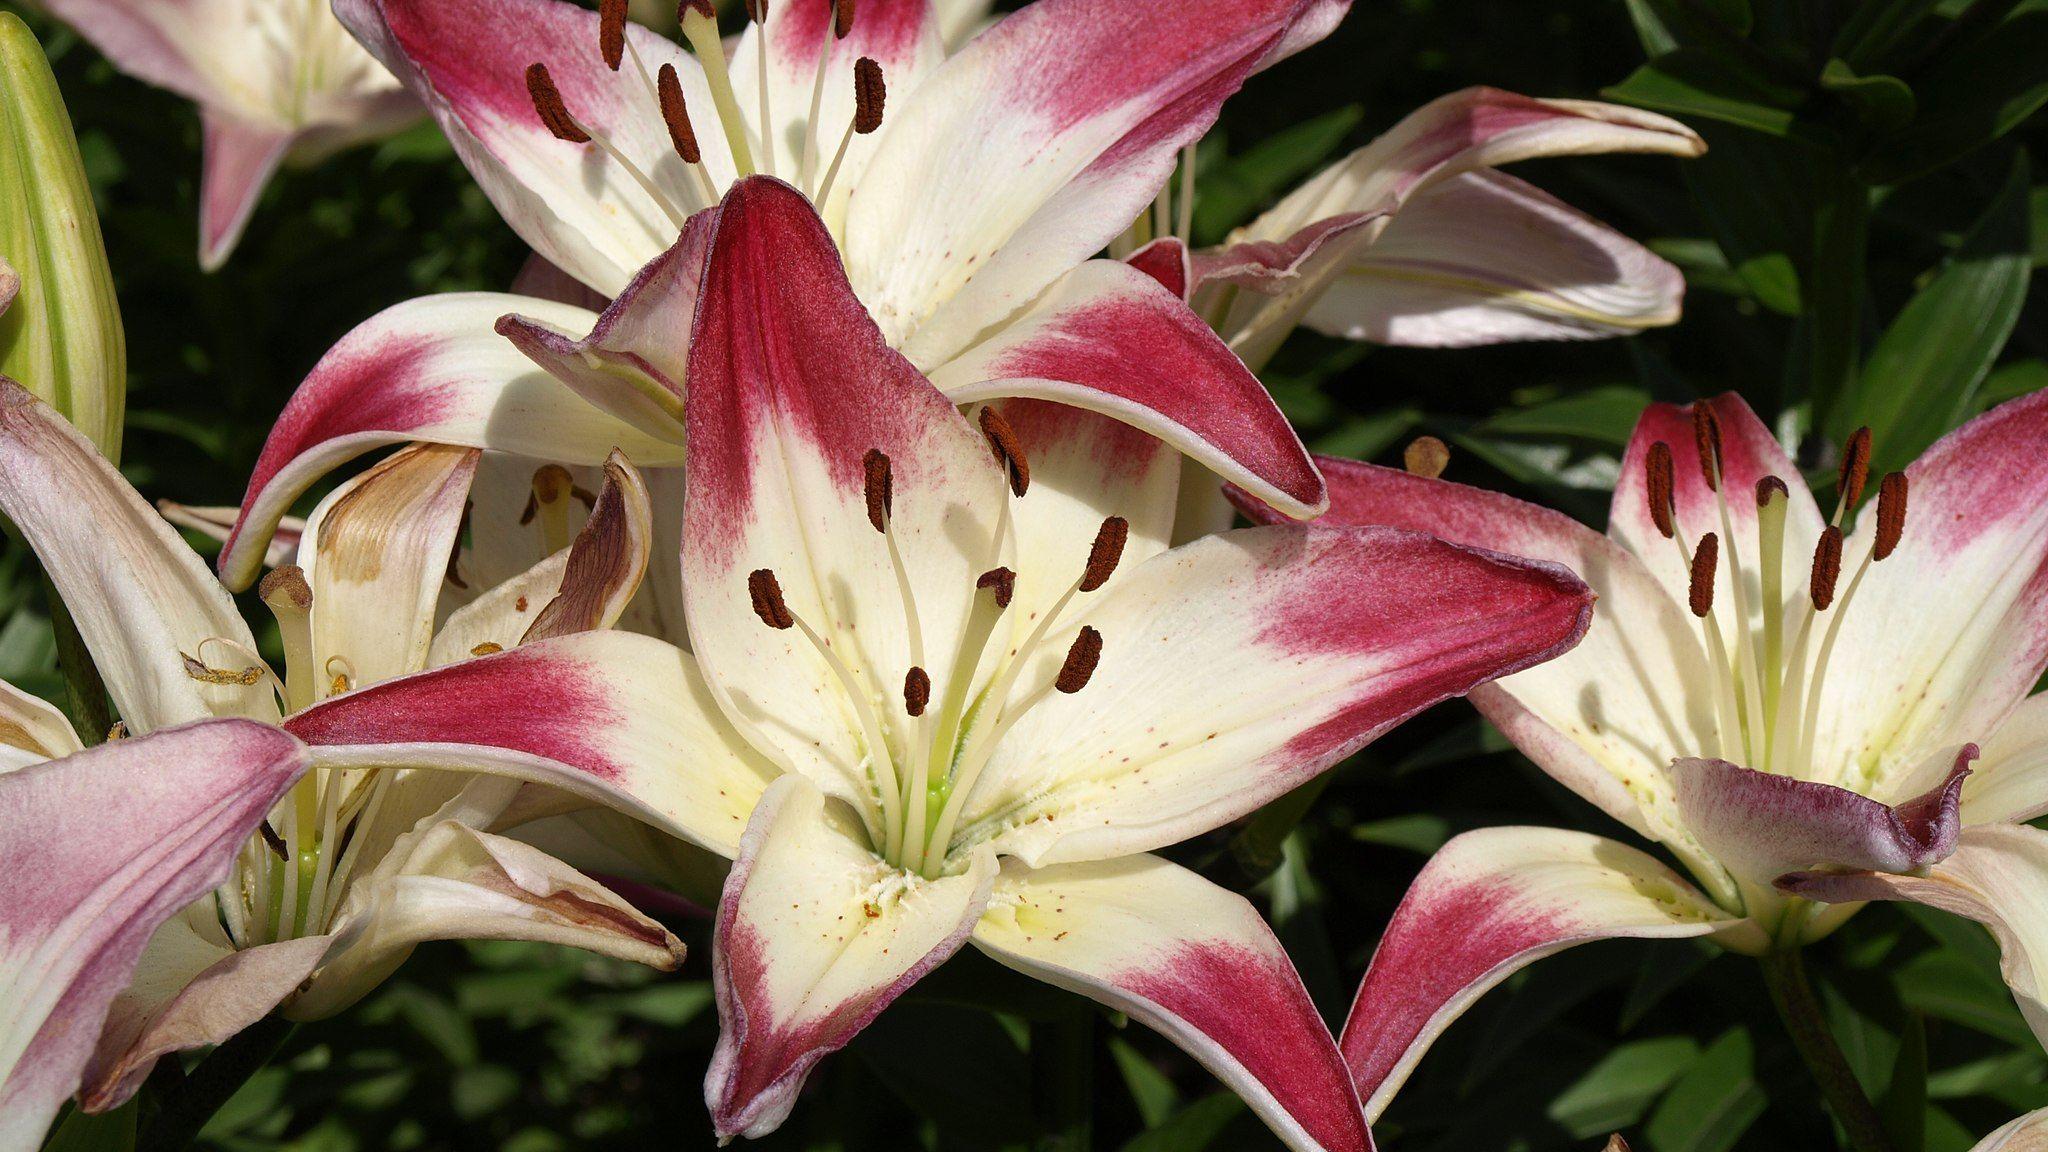 Lily flowers - symbolic image